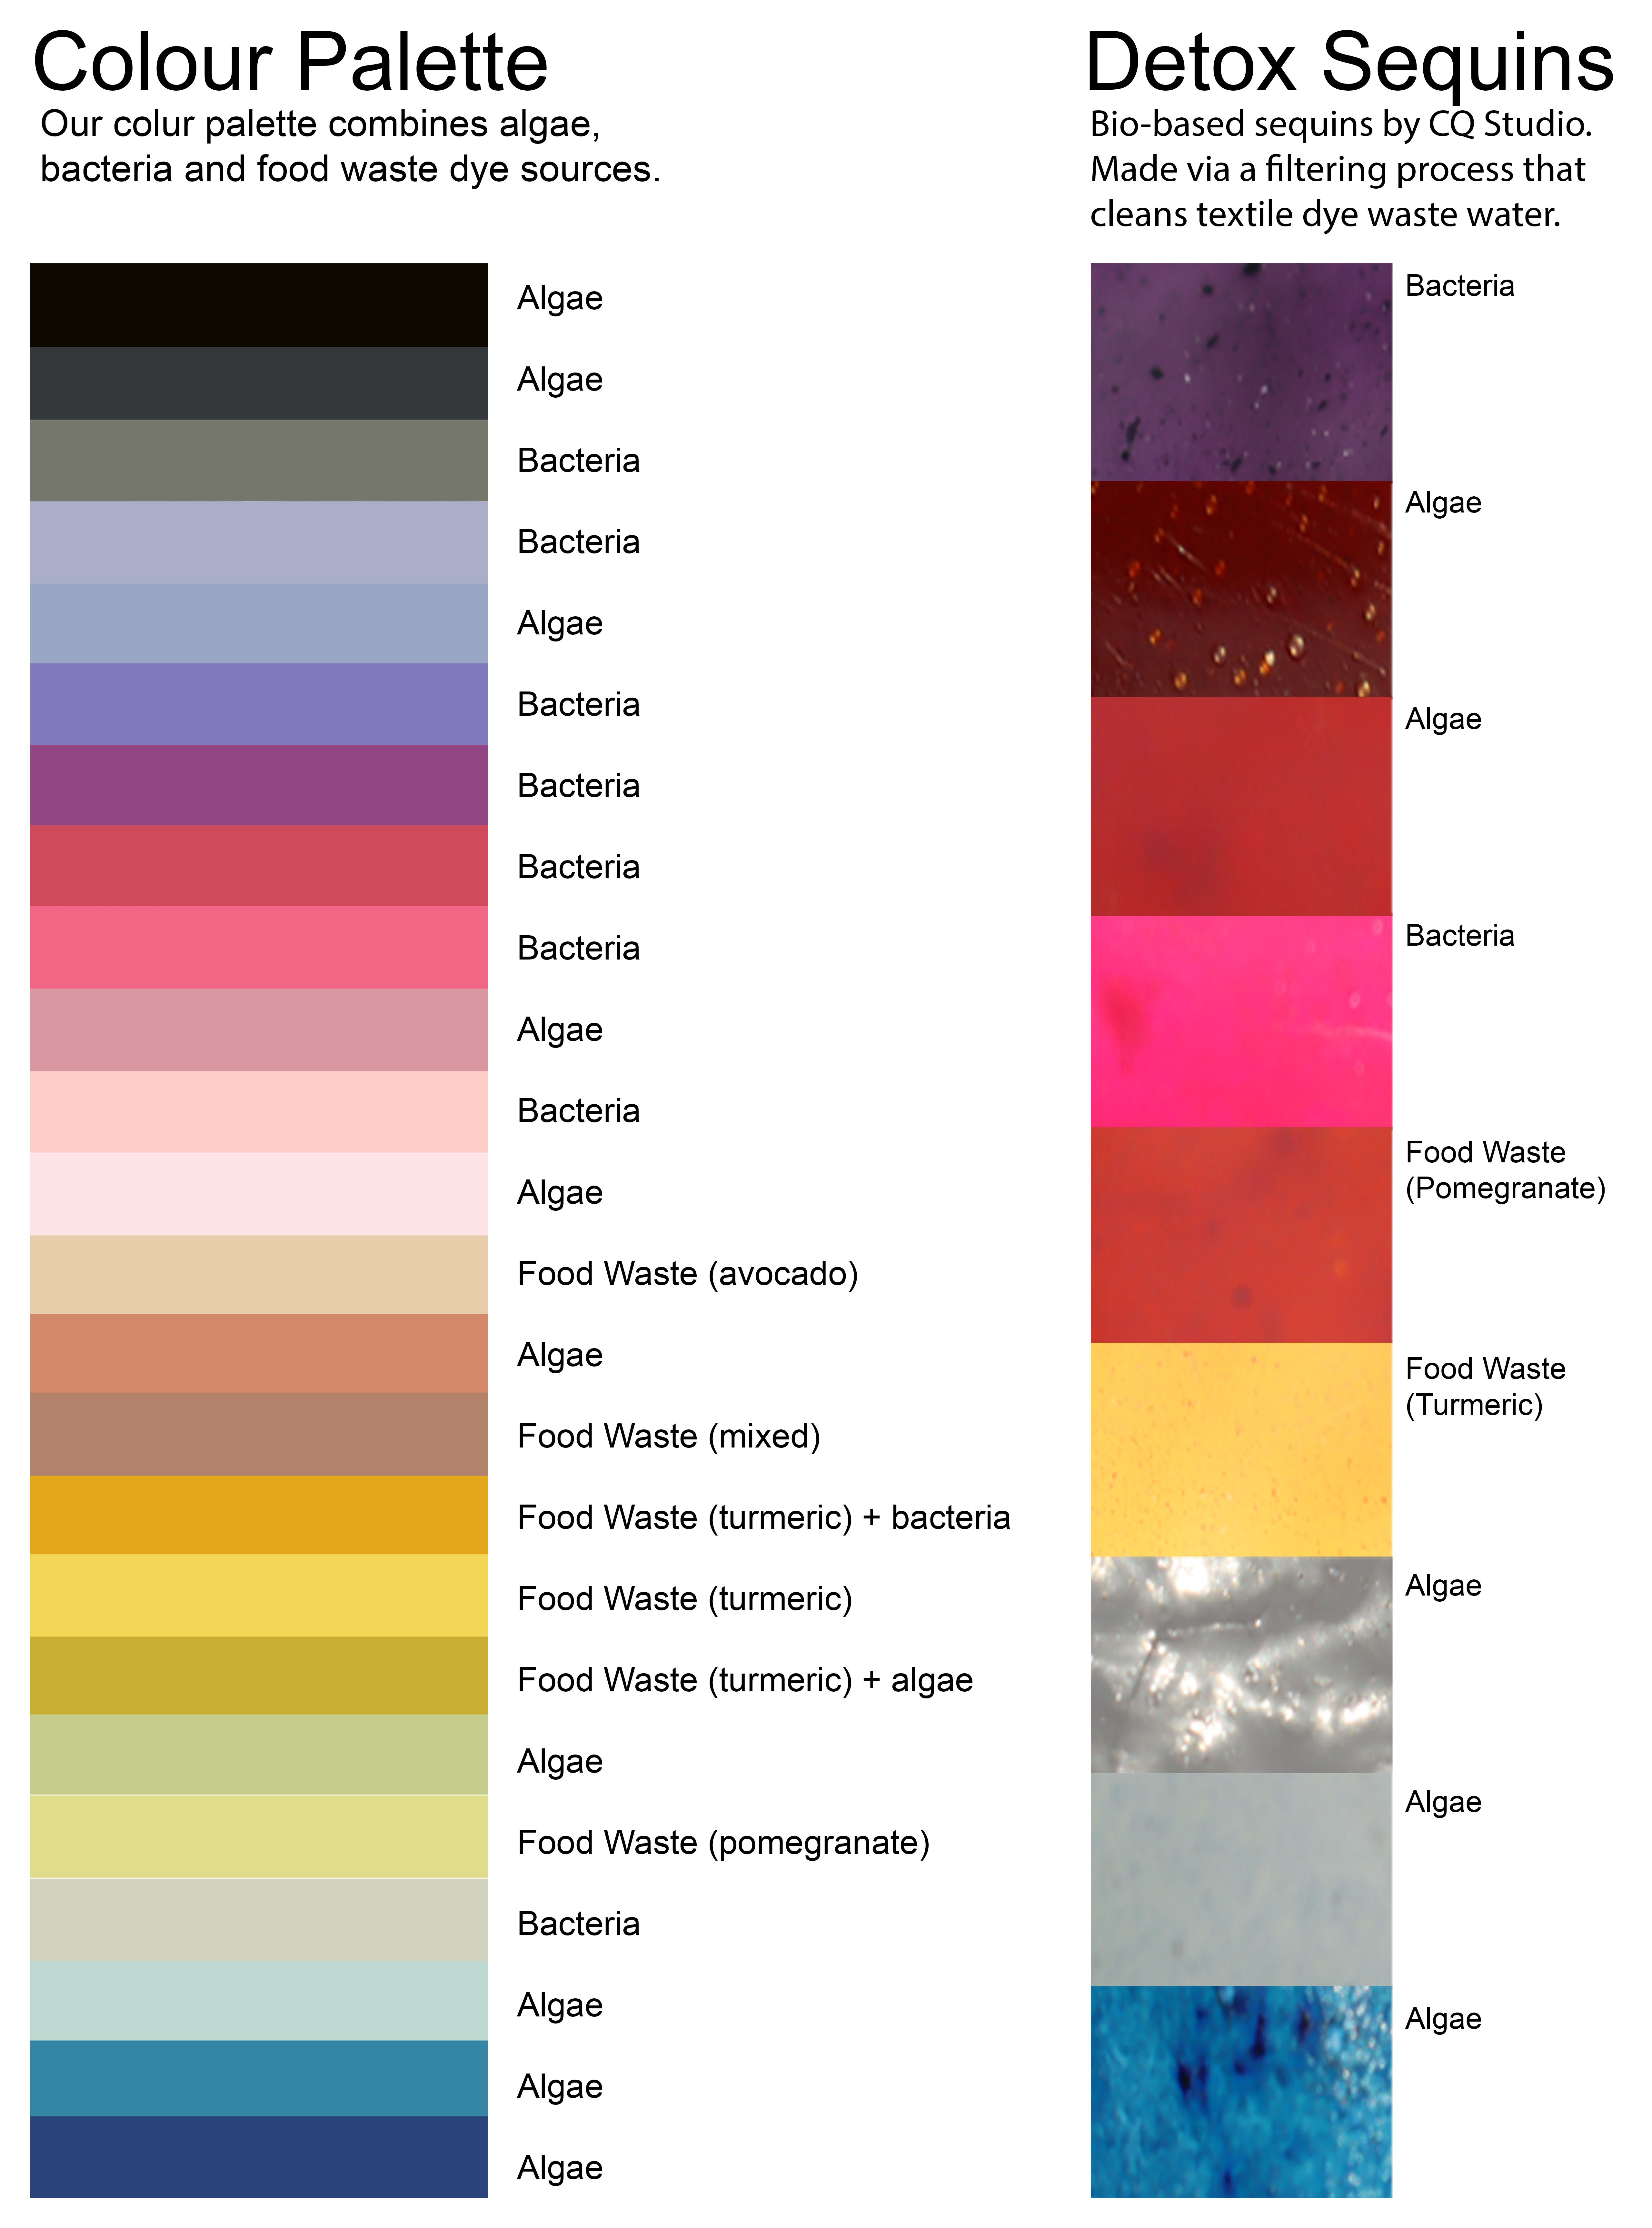 Bio-based-colour-palette-rewilding-texitles-maison0-2022-dye-sources.jpg